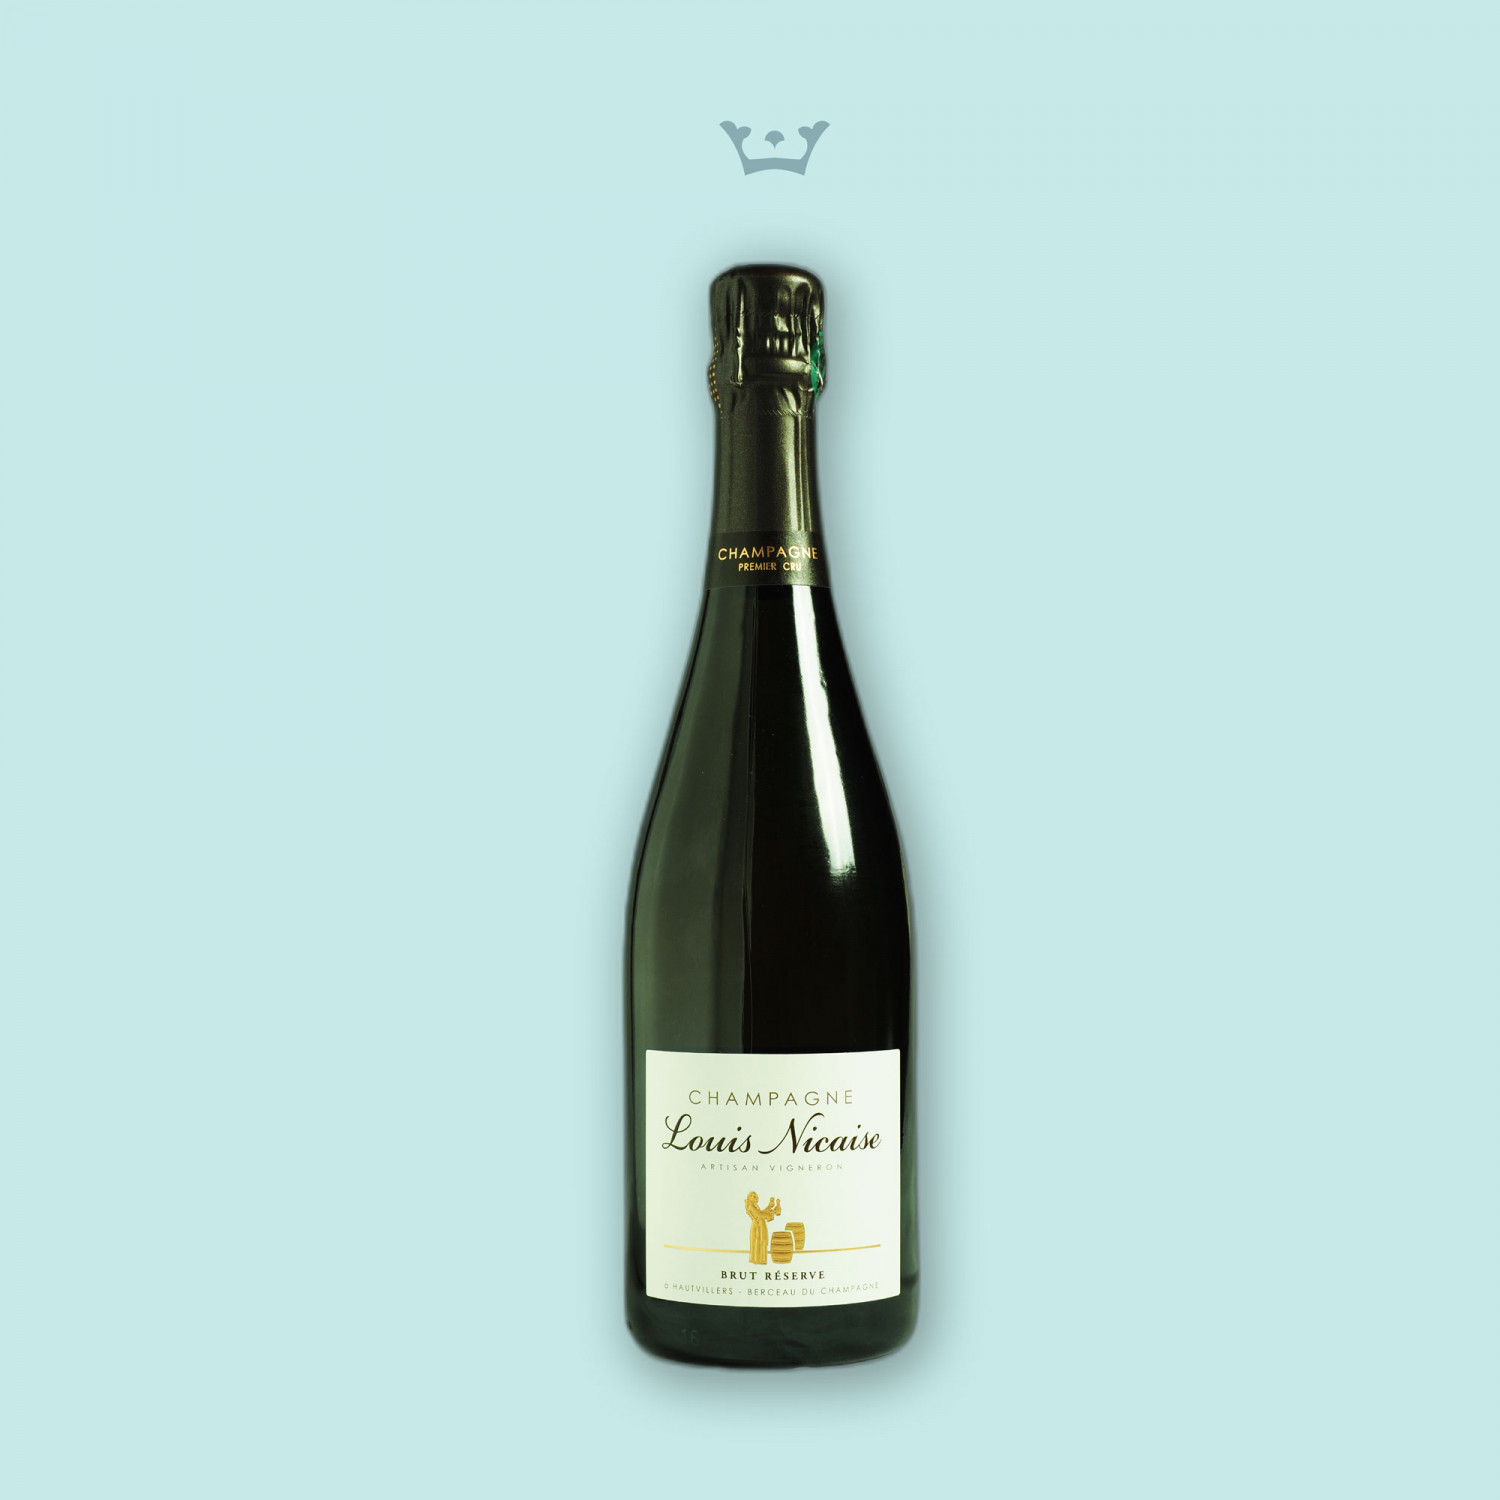 Vista frontale bottiglia Champagne Brut Reserve 1er Cru Louis Nicaise